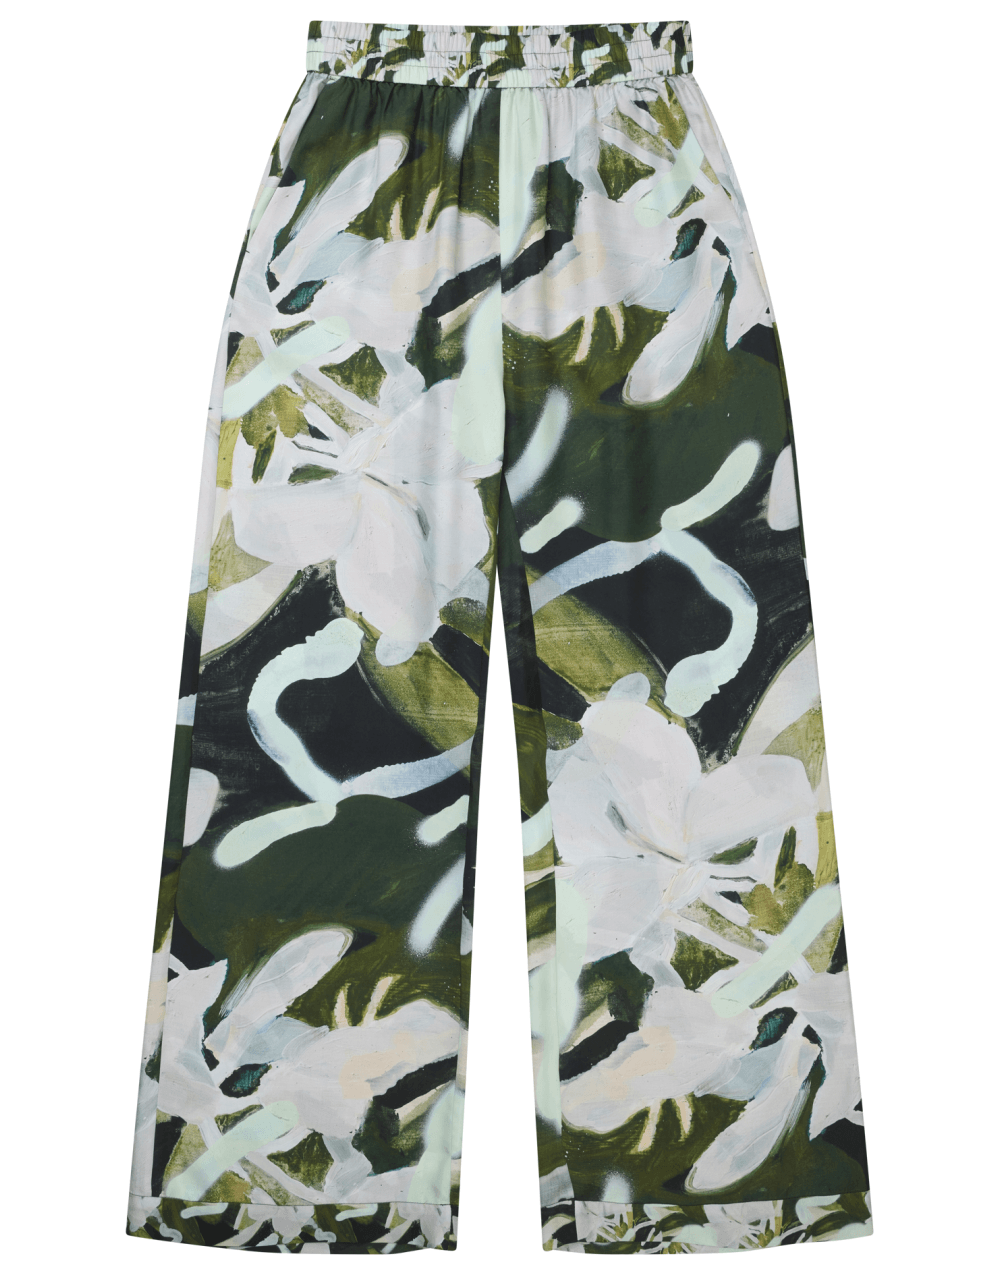 Munthe Arum Artist Print Silk Trousers Size: 8, Col: Army